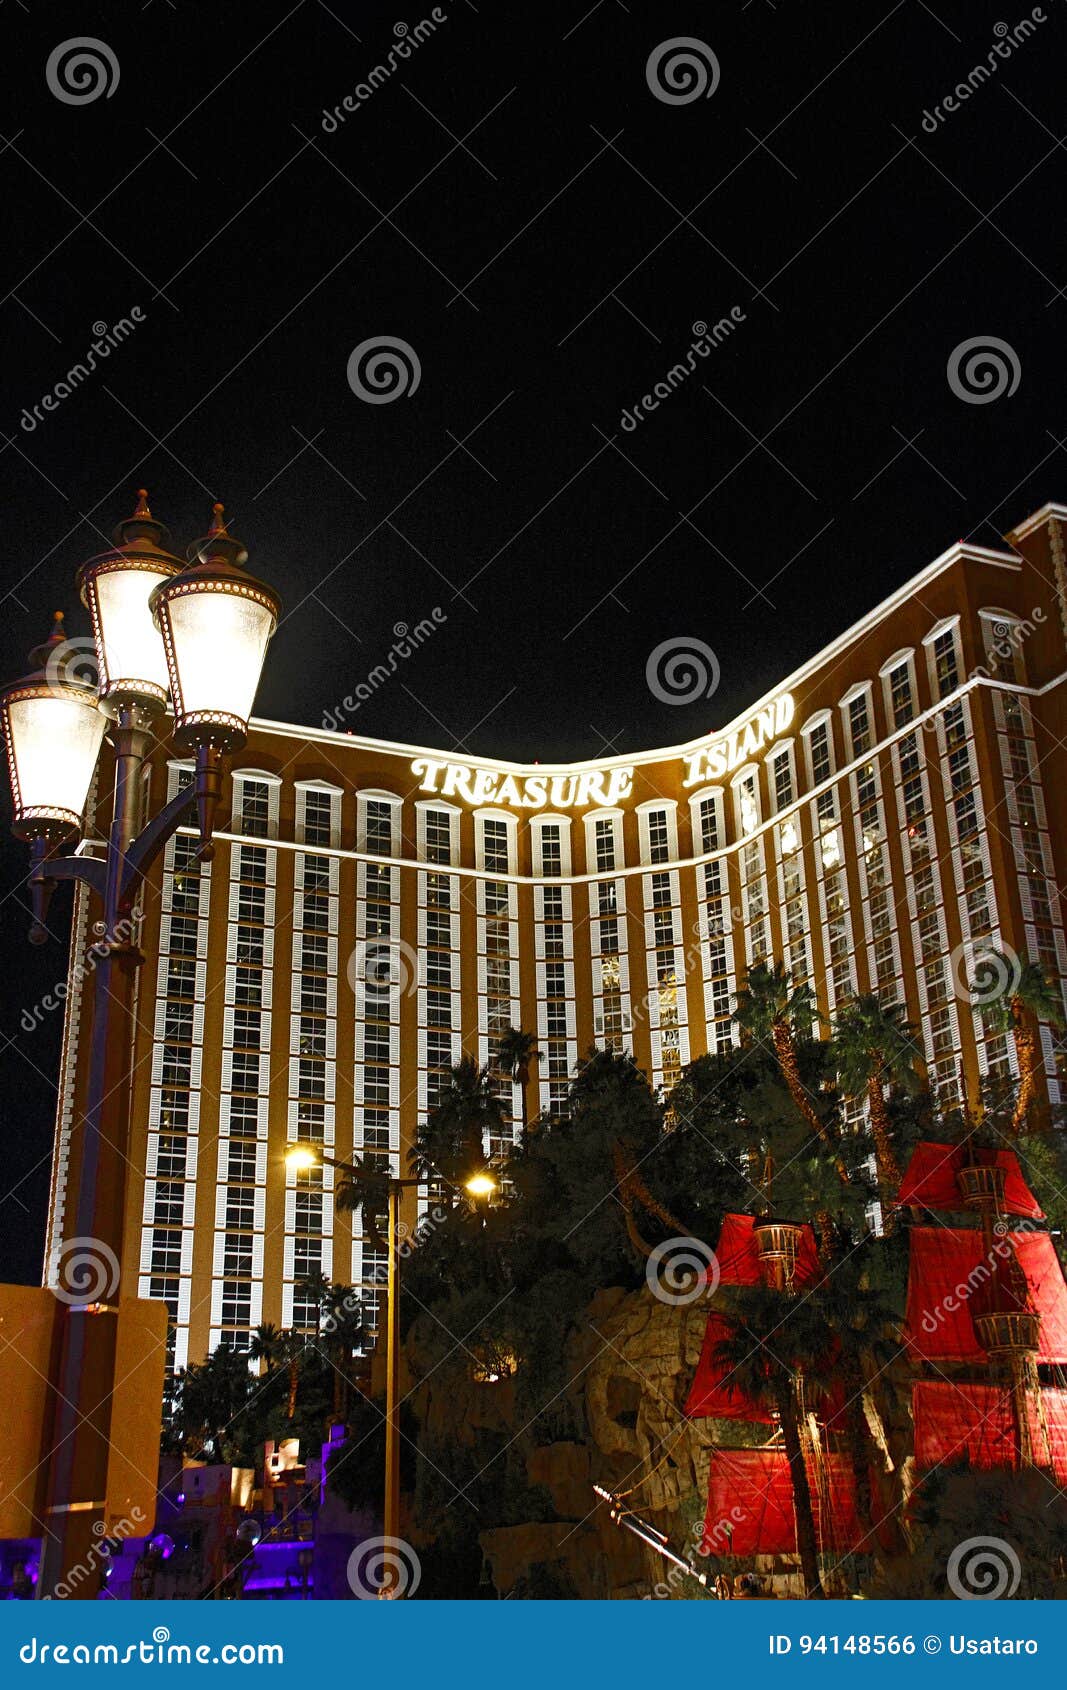 Treasure Island Hotel And Casino Editorial Photo Image Of